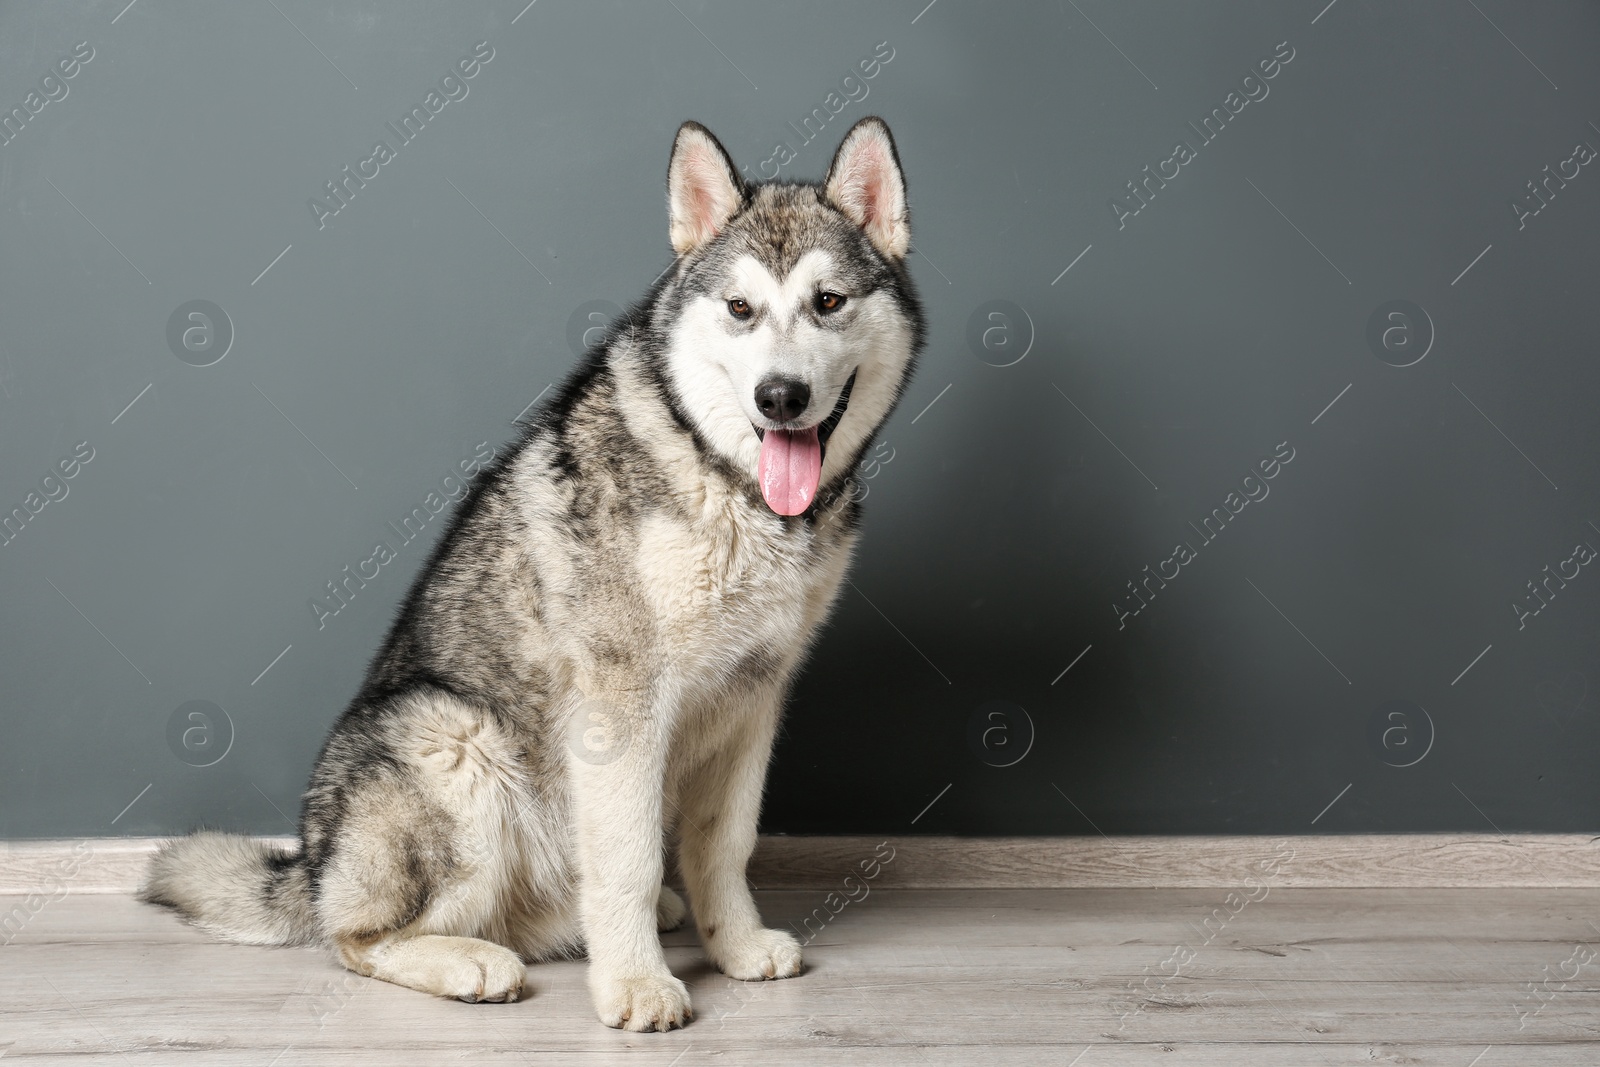 Photo of Cute Alaskan Malamute dog sitting on floor near gray wall